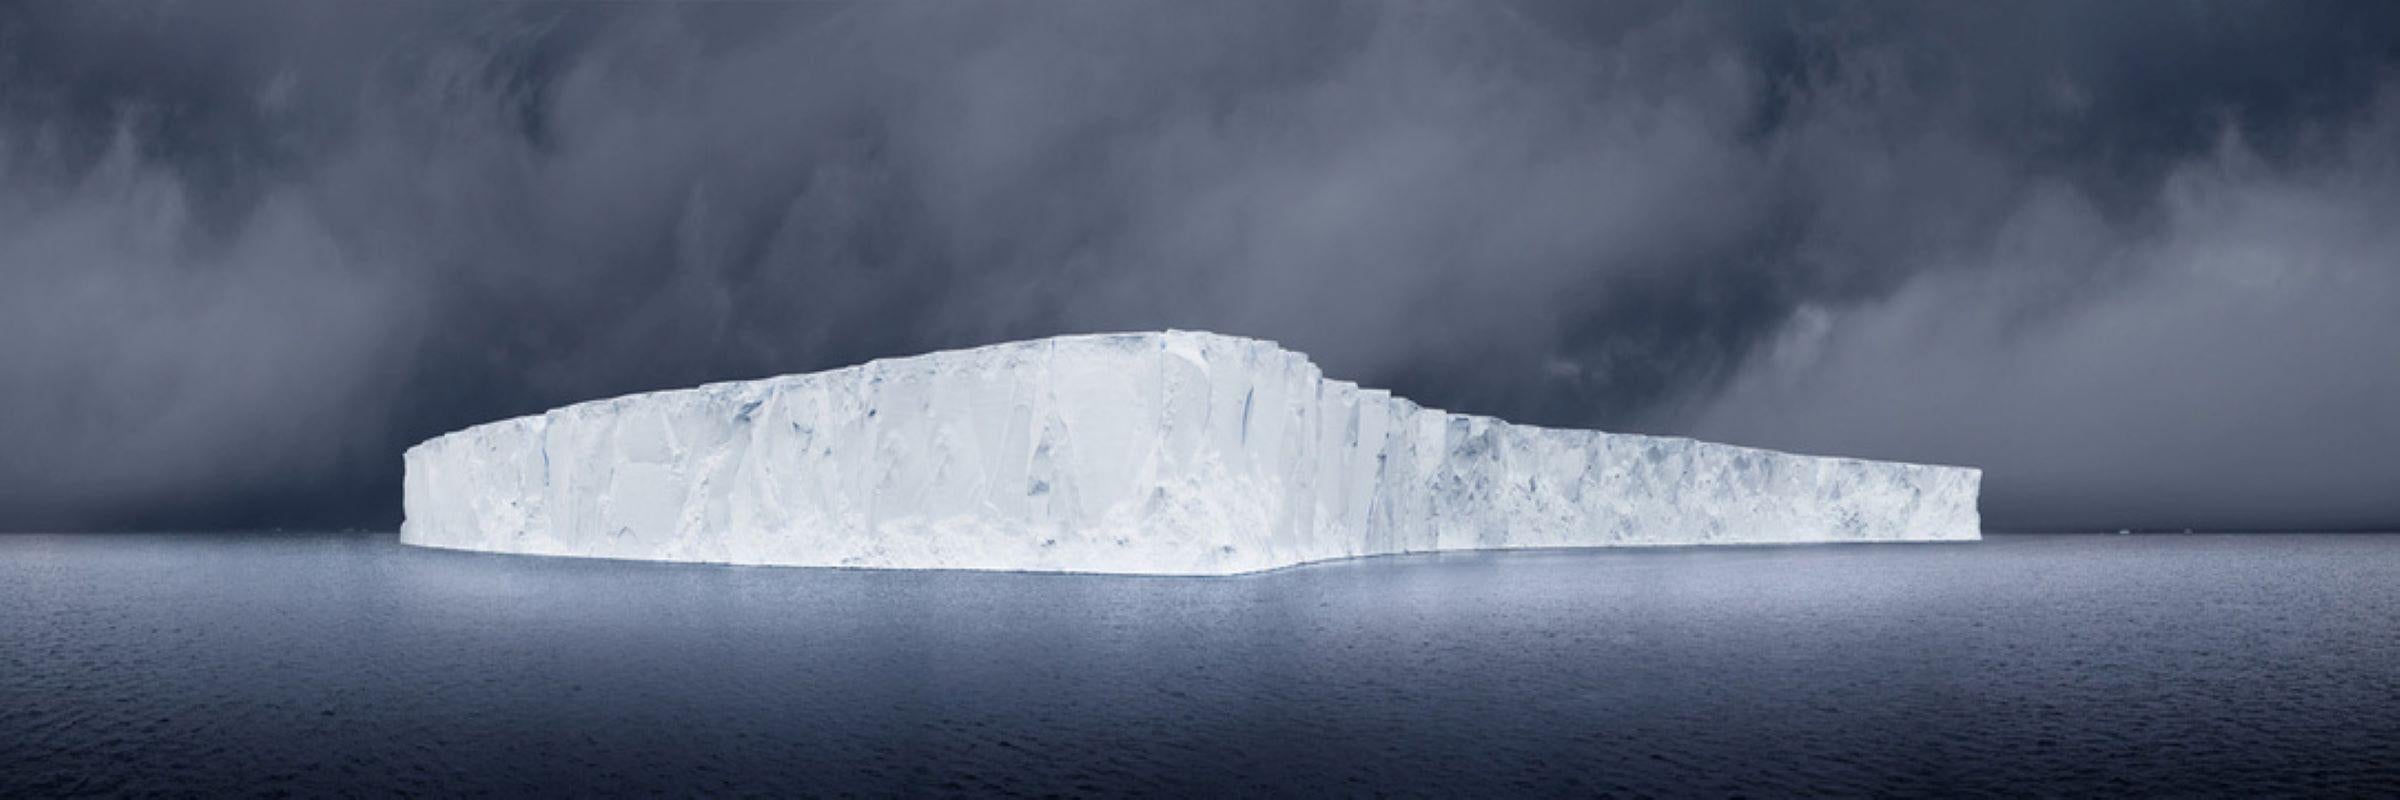 David Burdeny - Blue Monday, Antarctica (23" x 69")